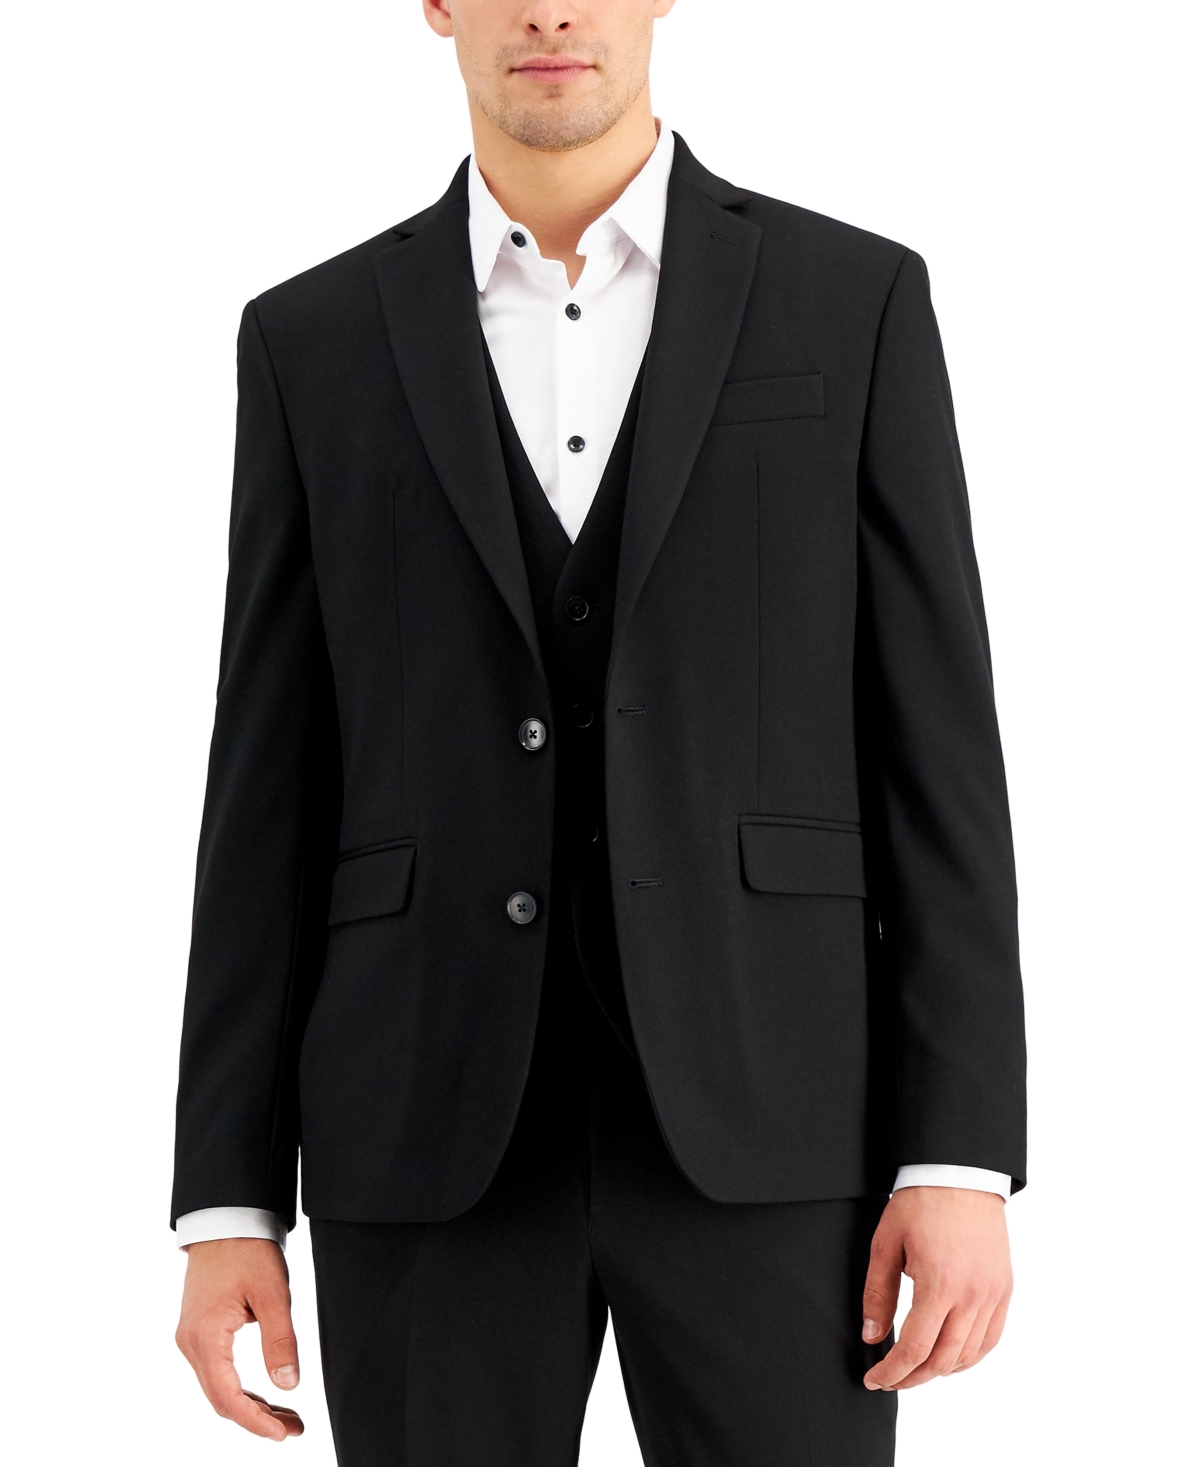 Men's Slim-Fit Black Solid Suit Jacket, Created for Macy's - Deep Black